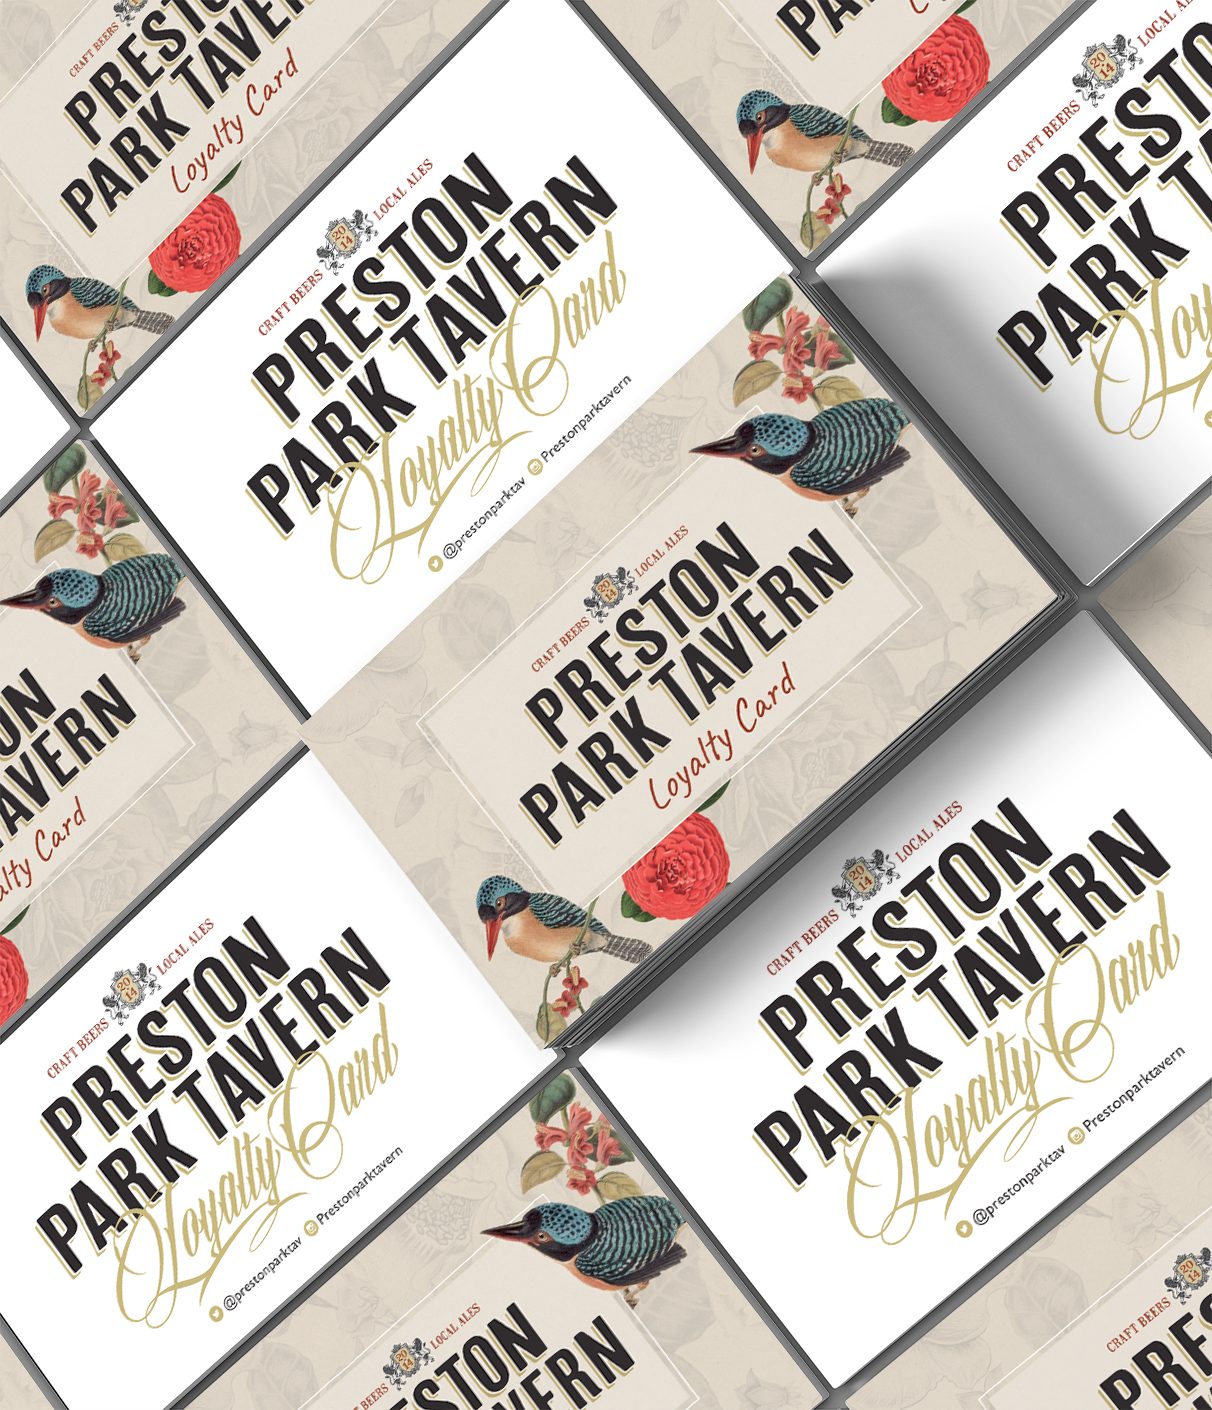 preston park tavern loyalty cards